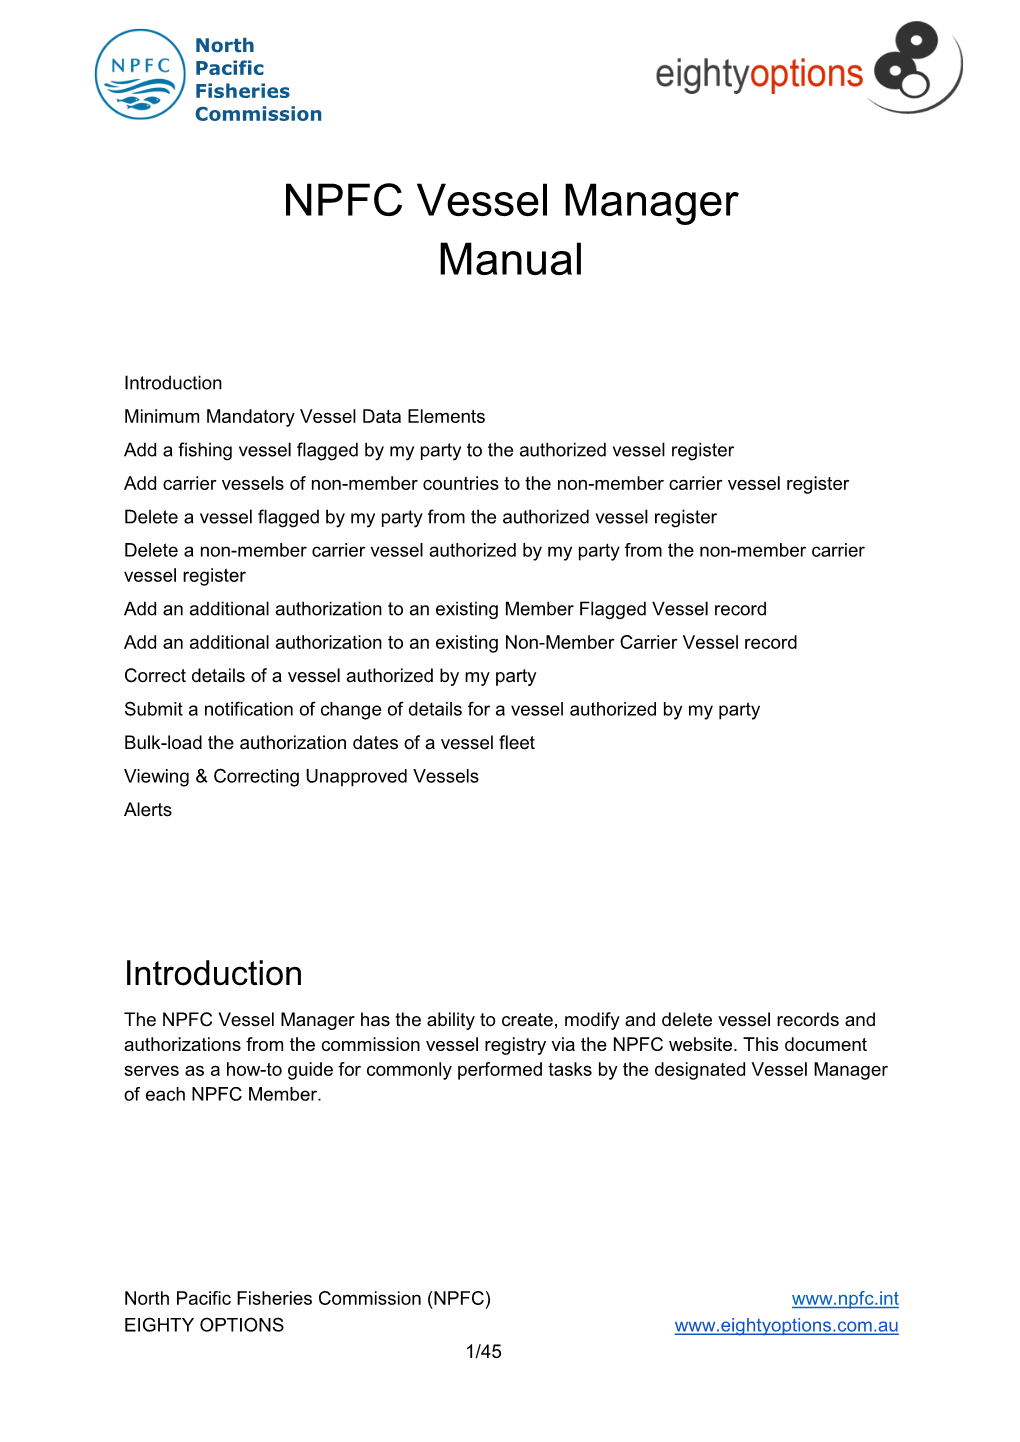 NPFC Vessel Manager Manual